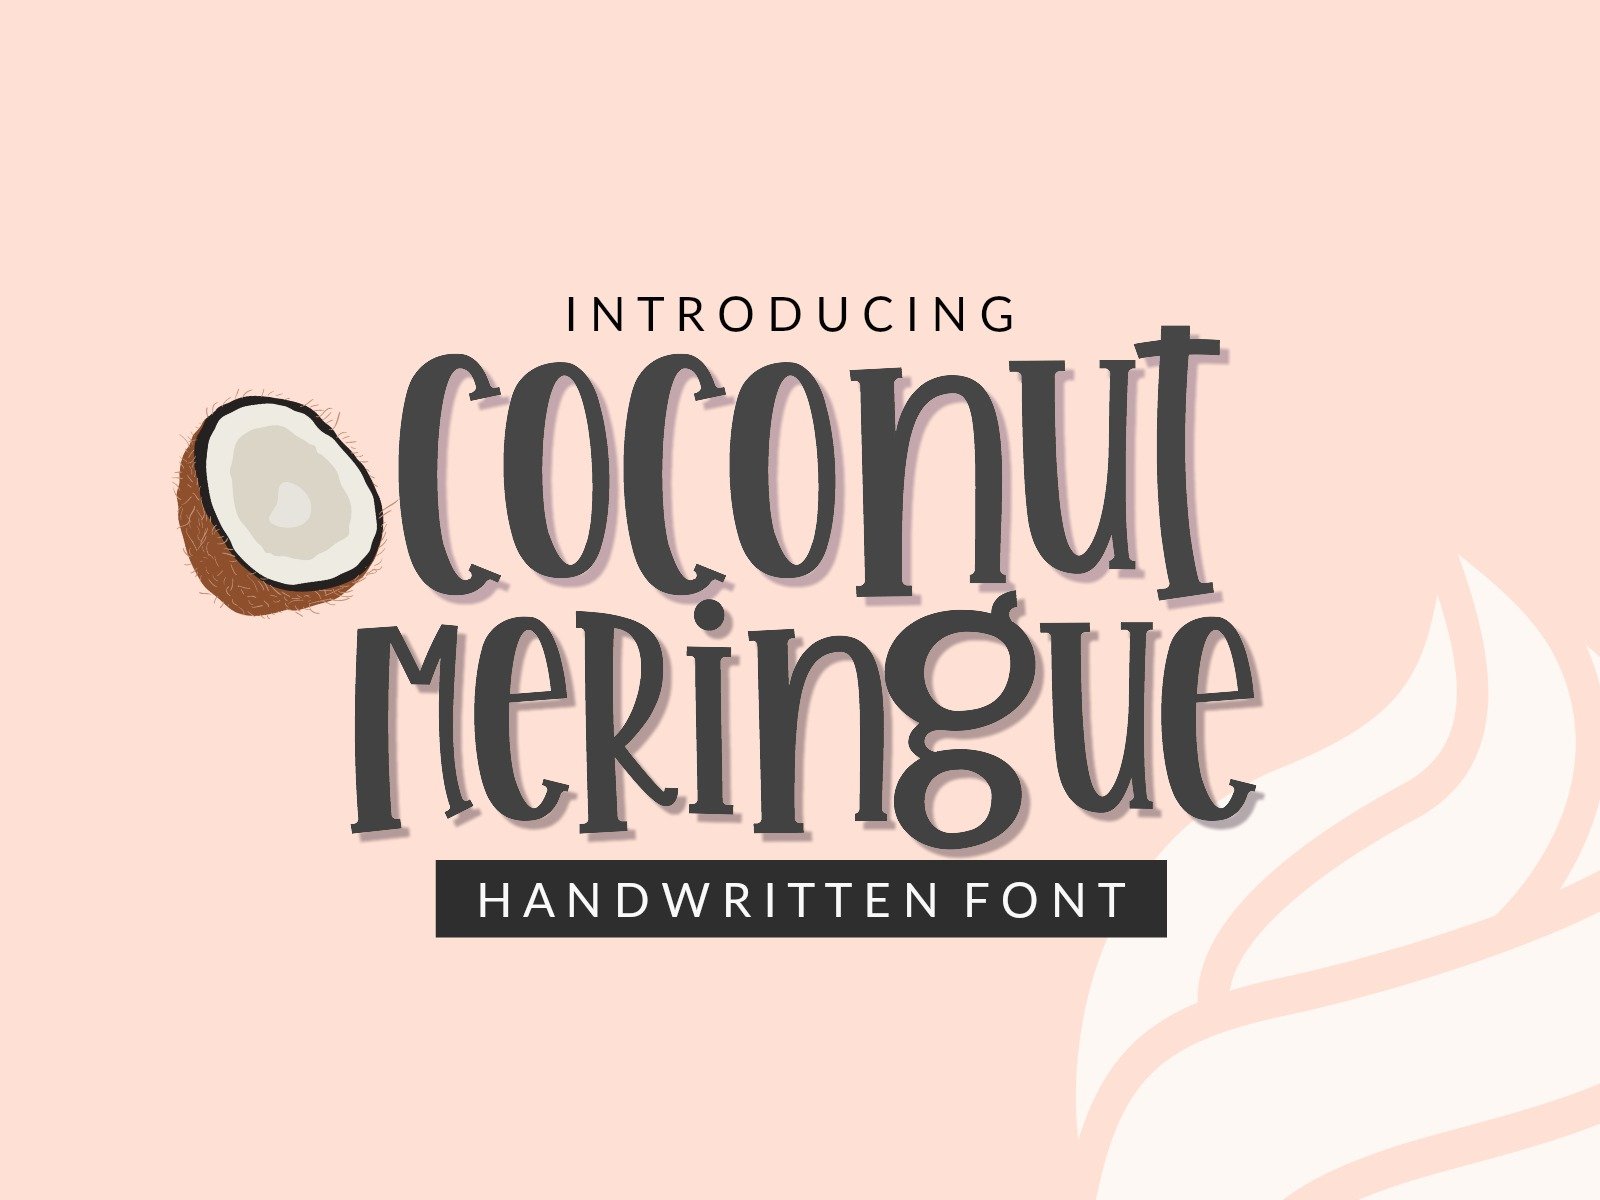 Coconut Meringue Handwritten Font cover image.